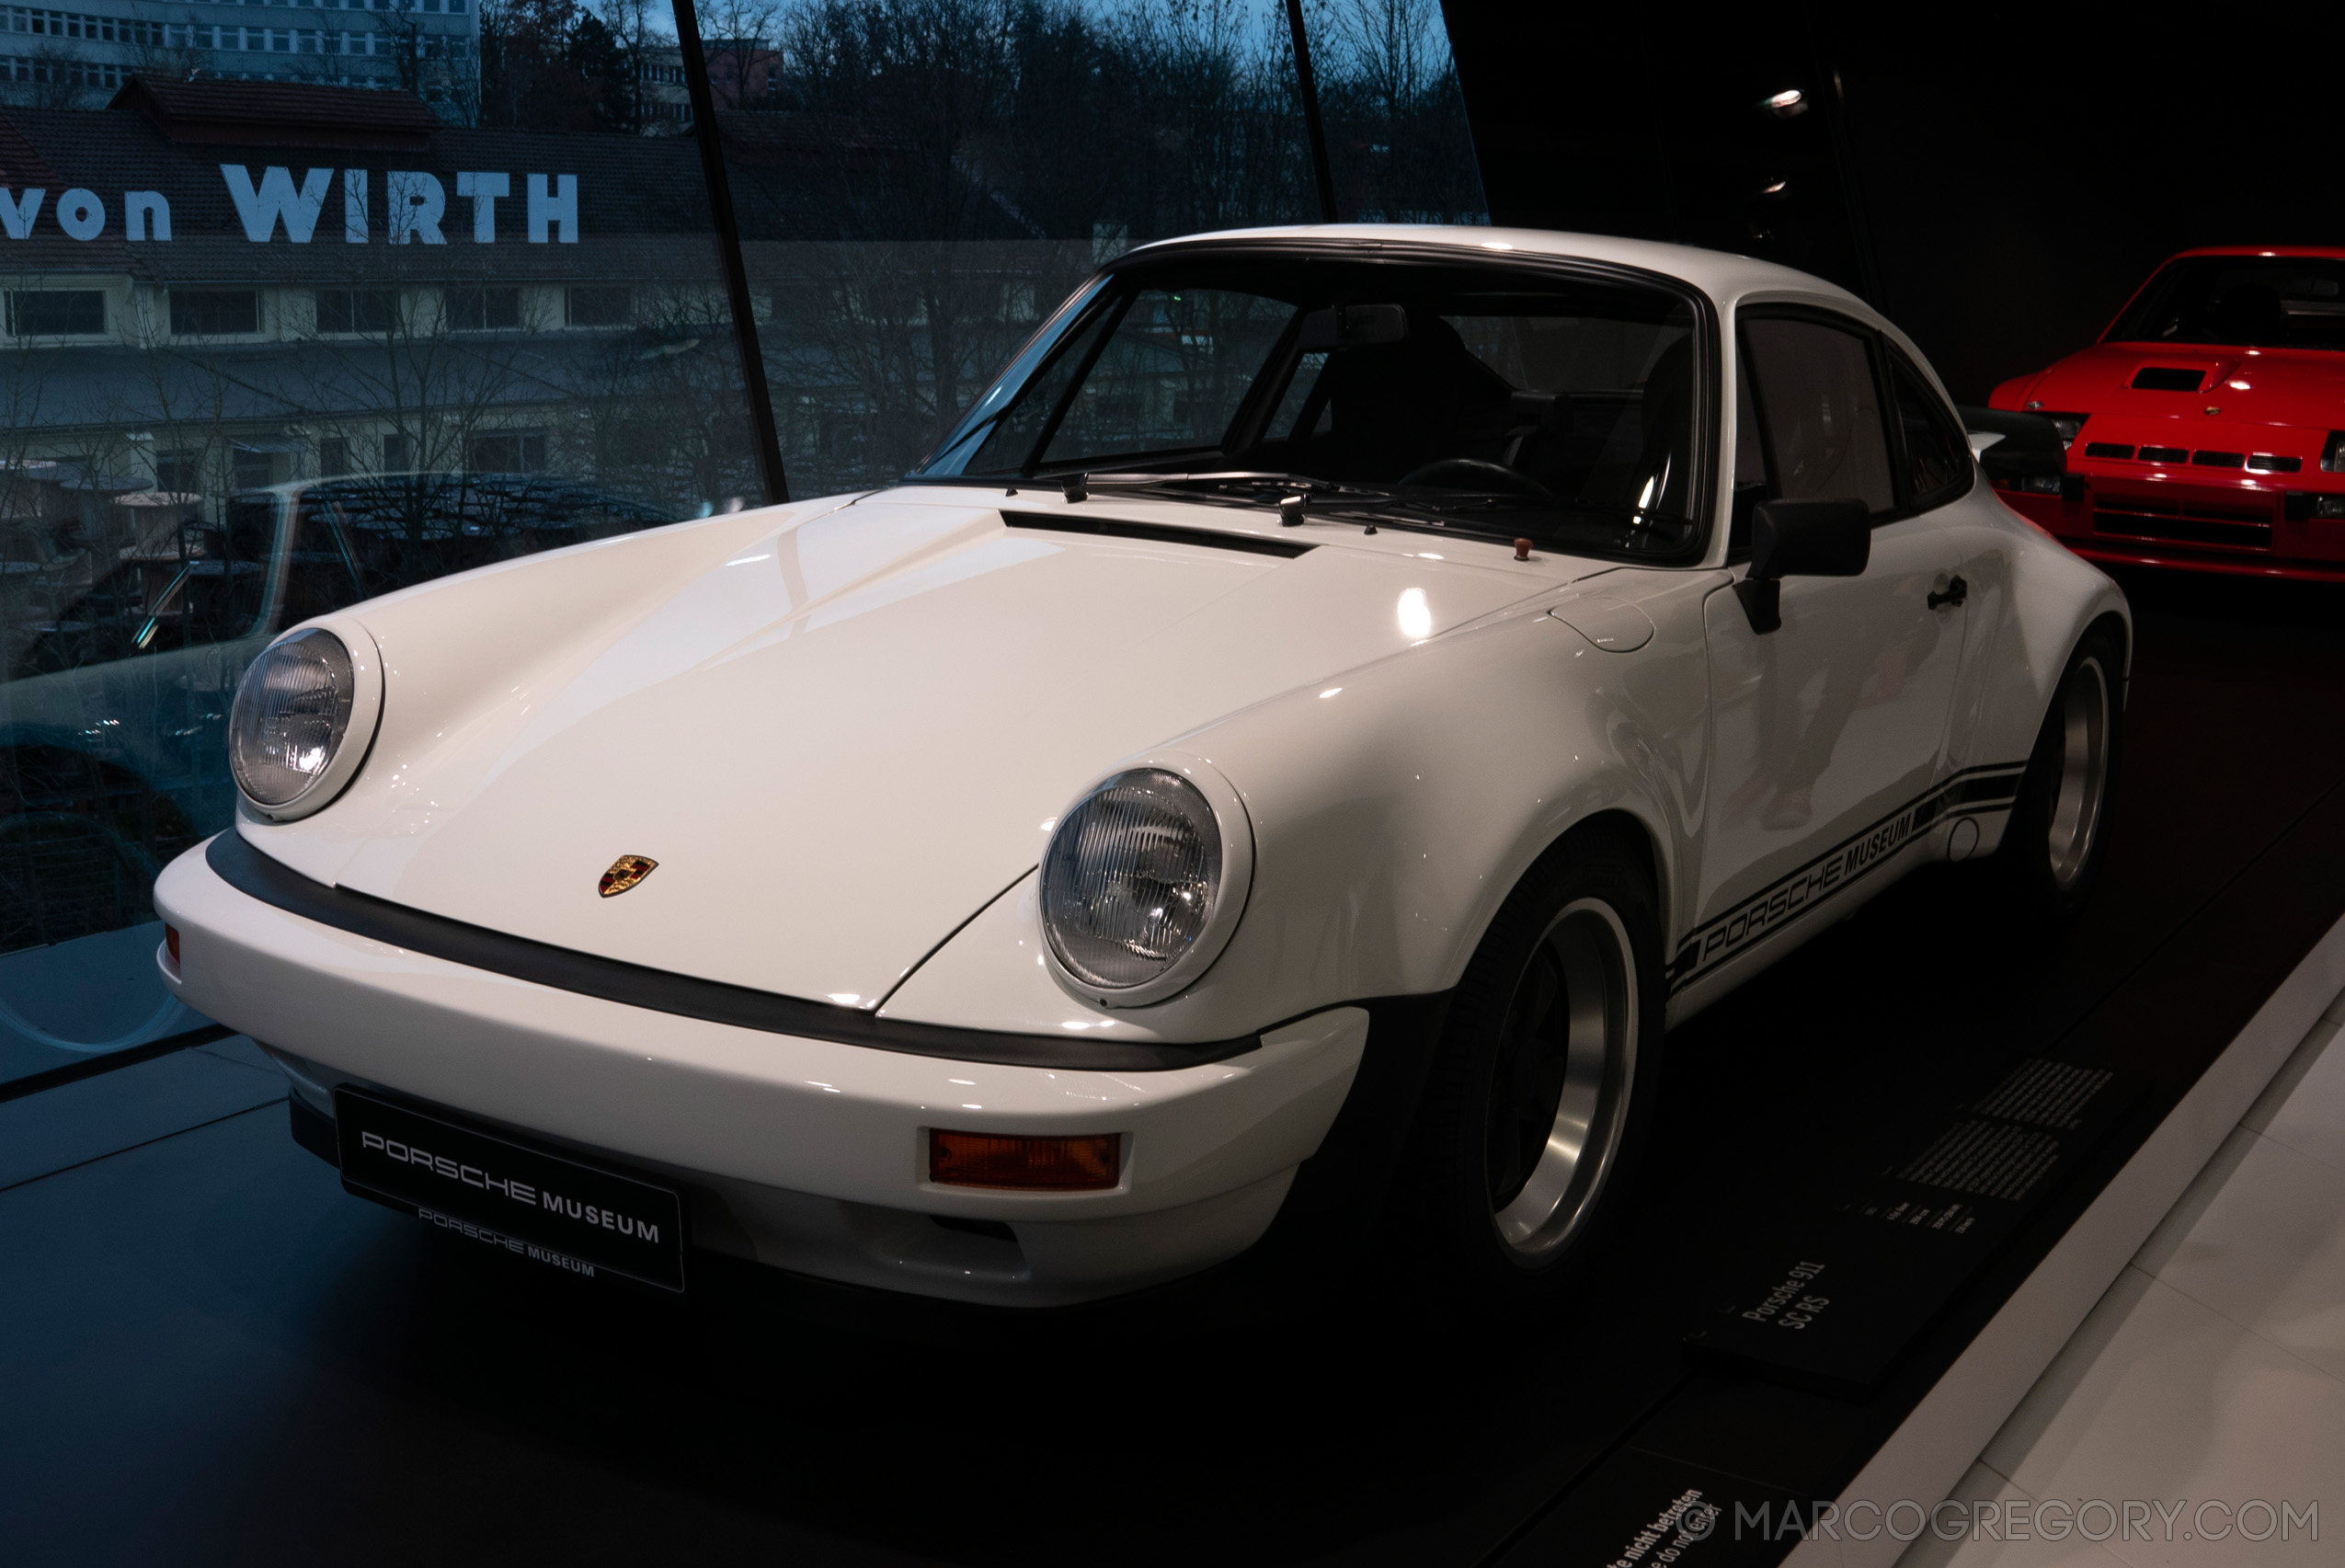 151128 Porsche Museum - Photo0022 of 92